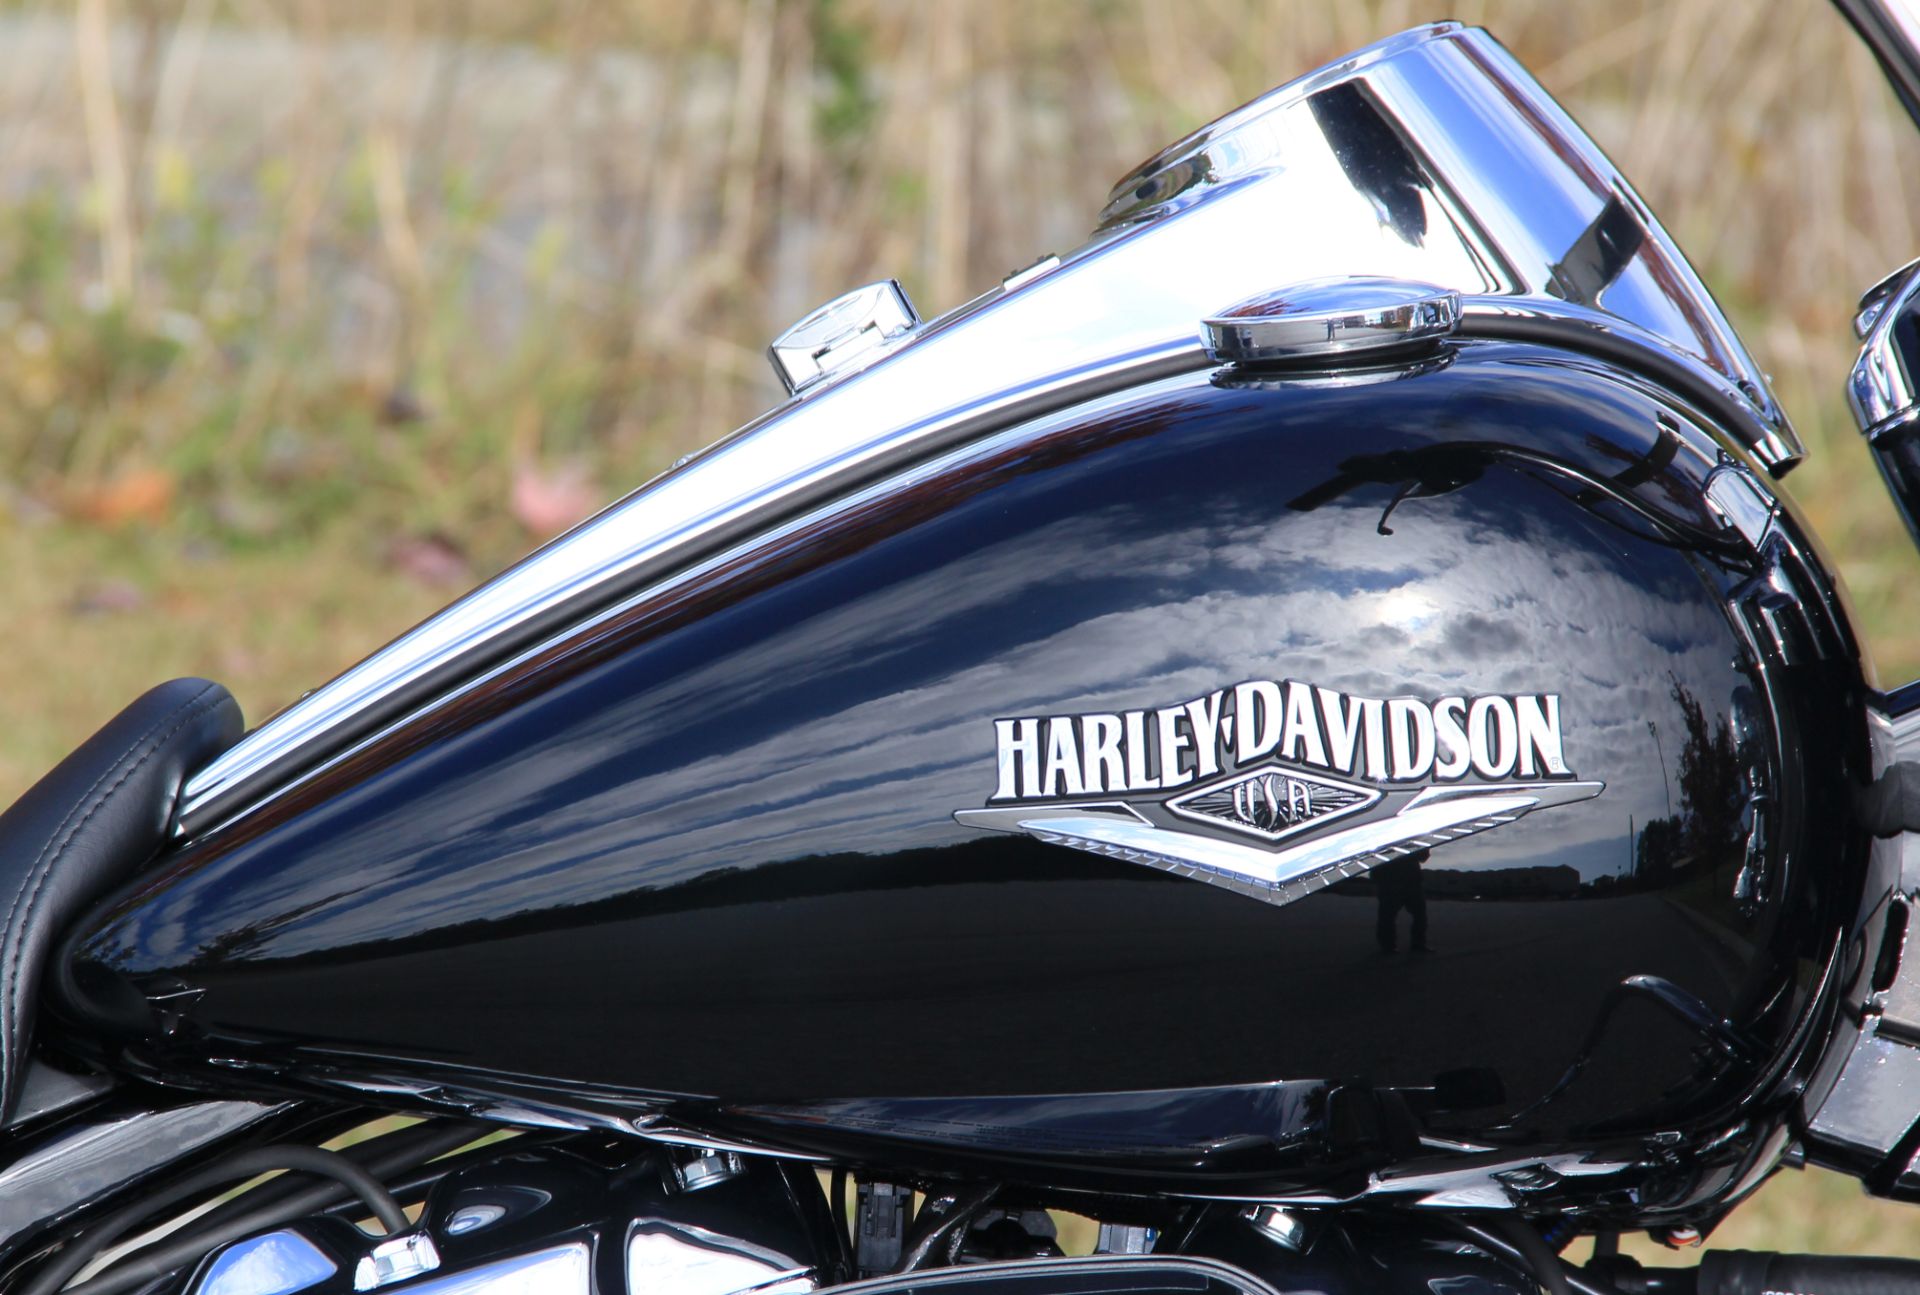 2021 Harley-Davidson Road King® in Cartersville, Georgia - Photo 11